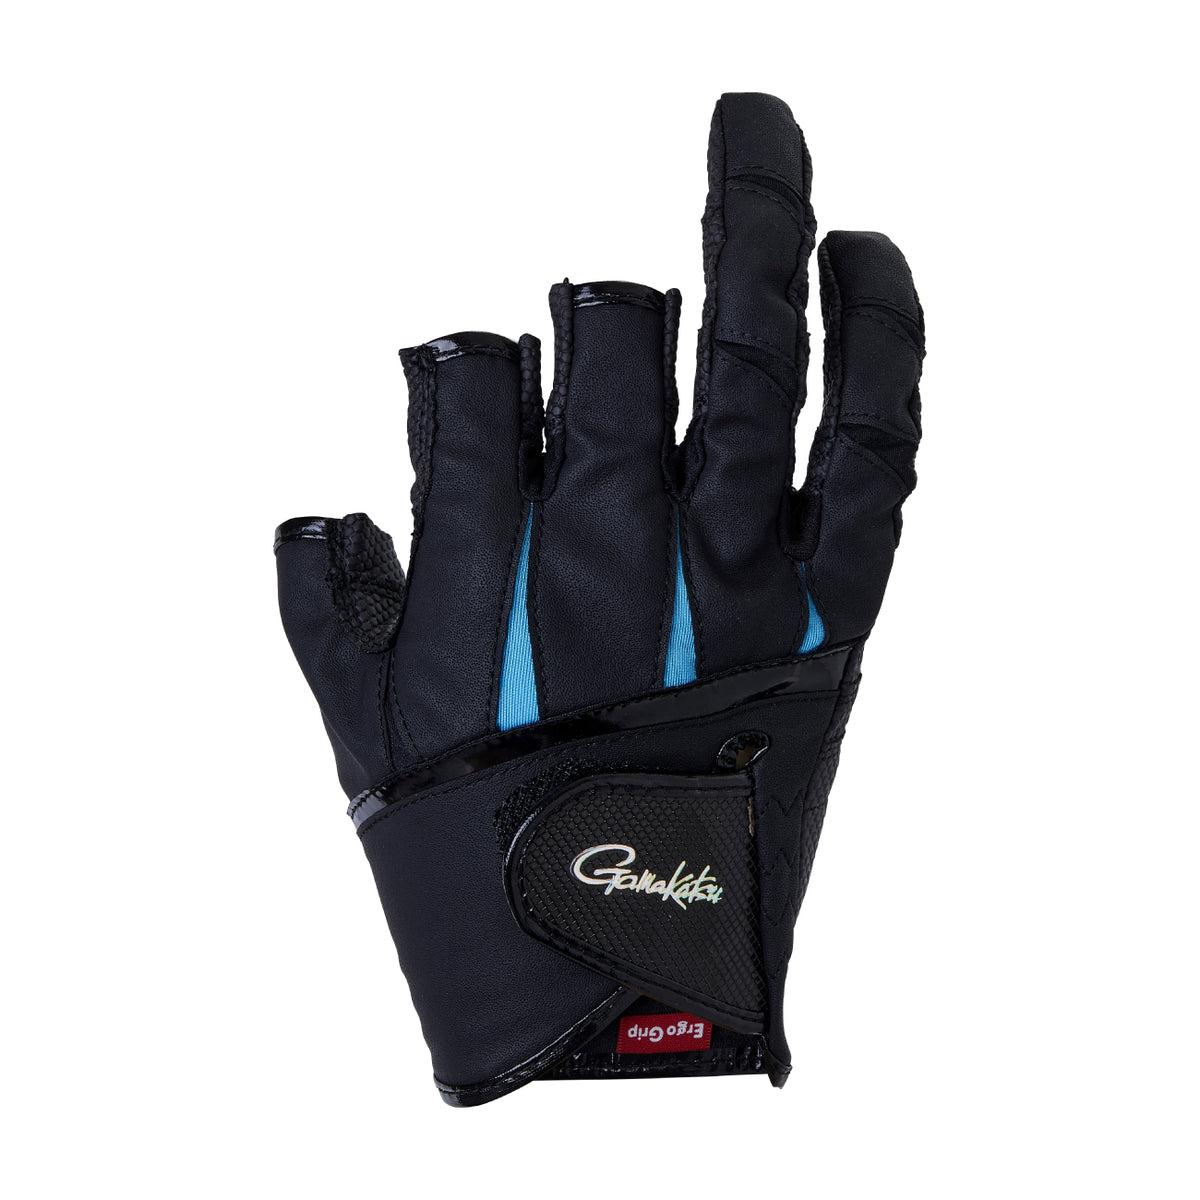 Gamakatsu Ergo Grip Fishing Gloves (3 Cuts) GM7295 - ATTENDER Color